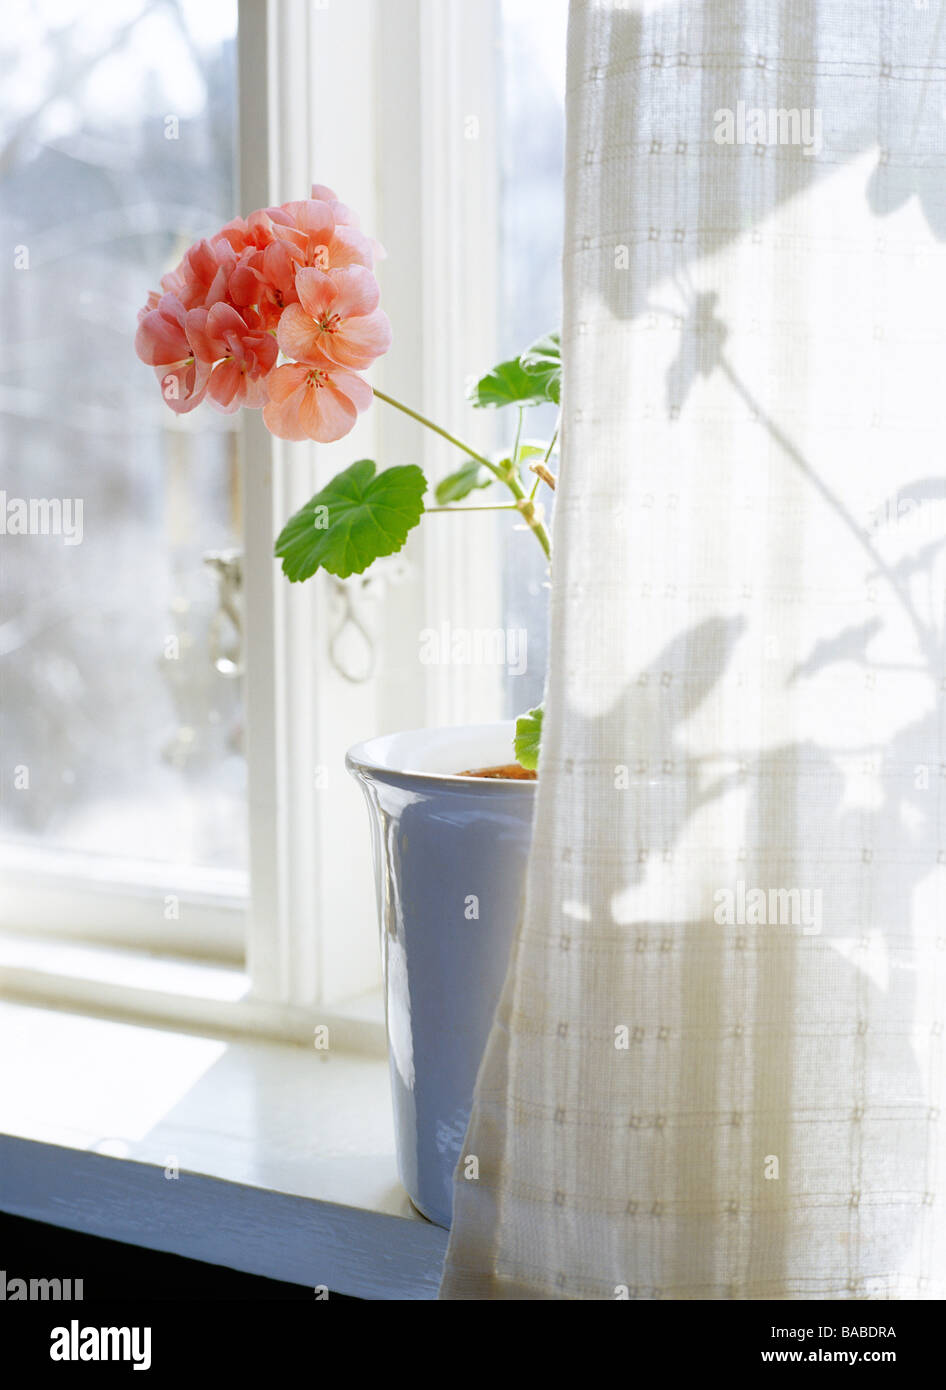 A flower by a window Sweden Stock Photo